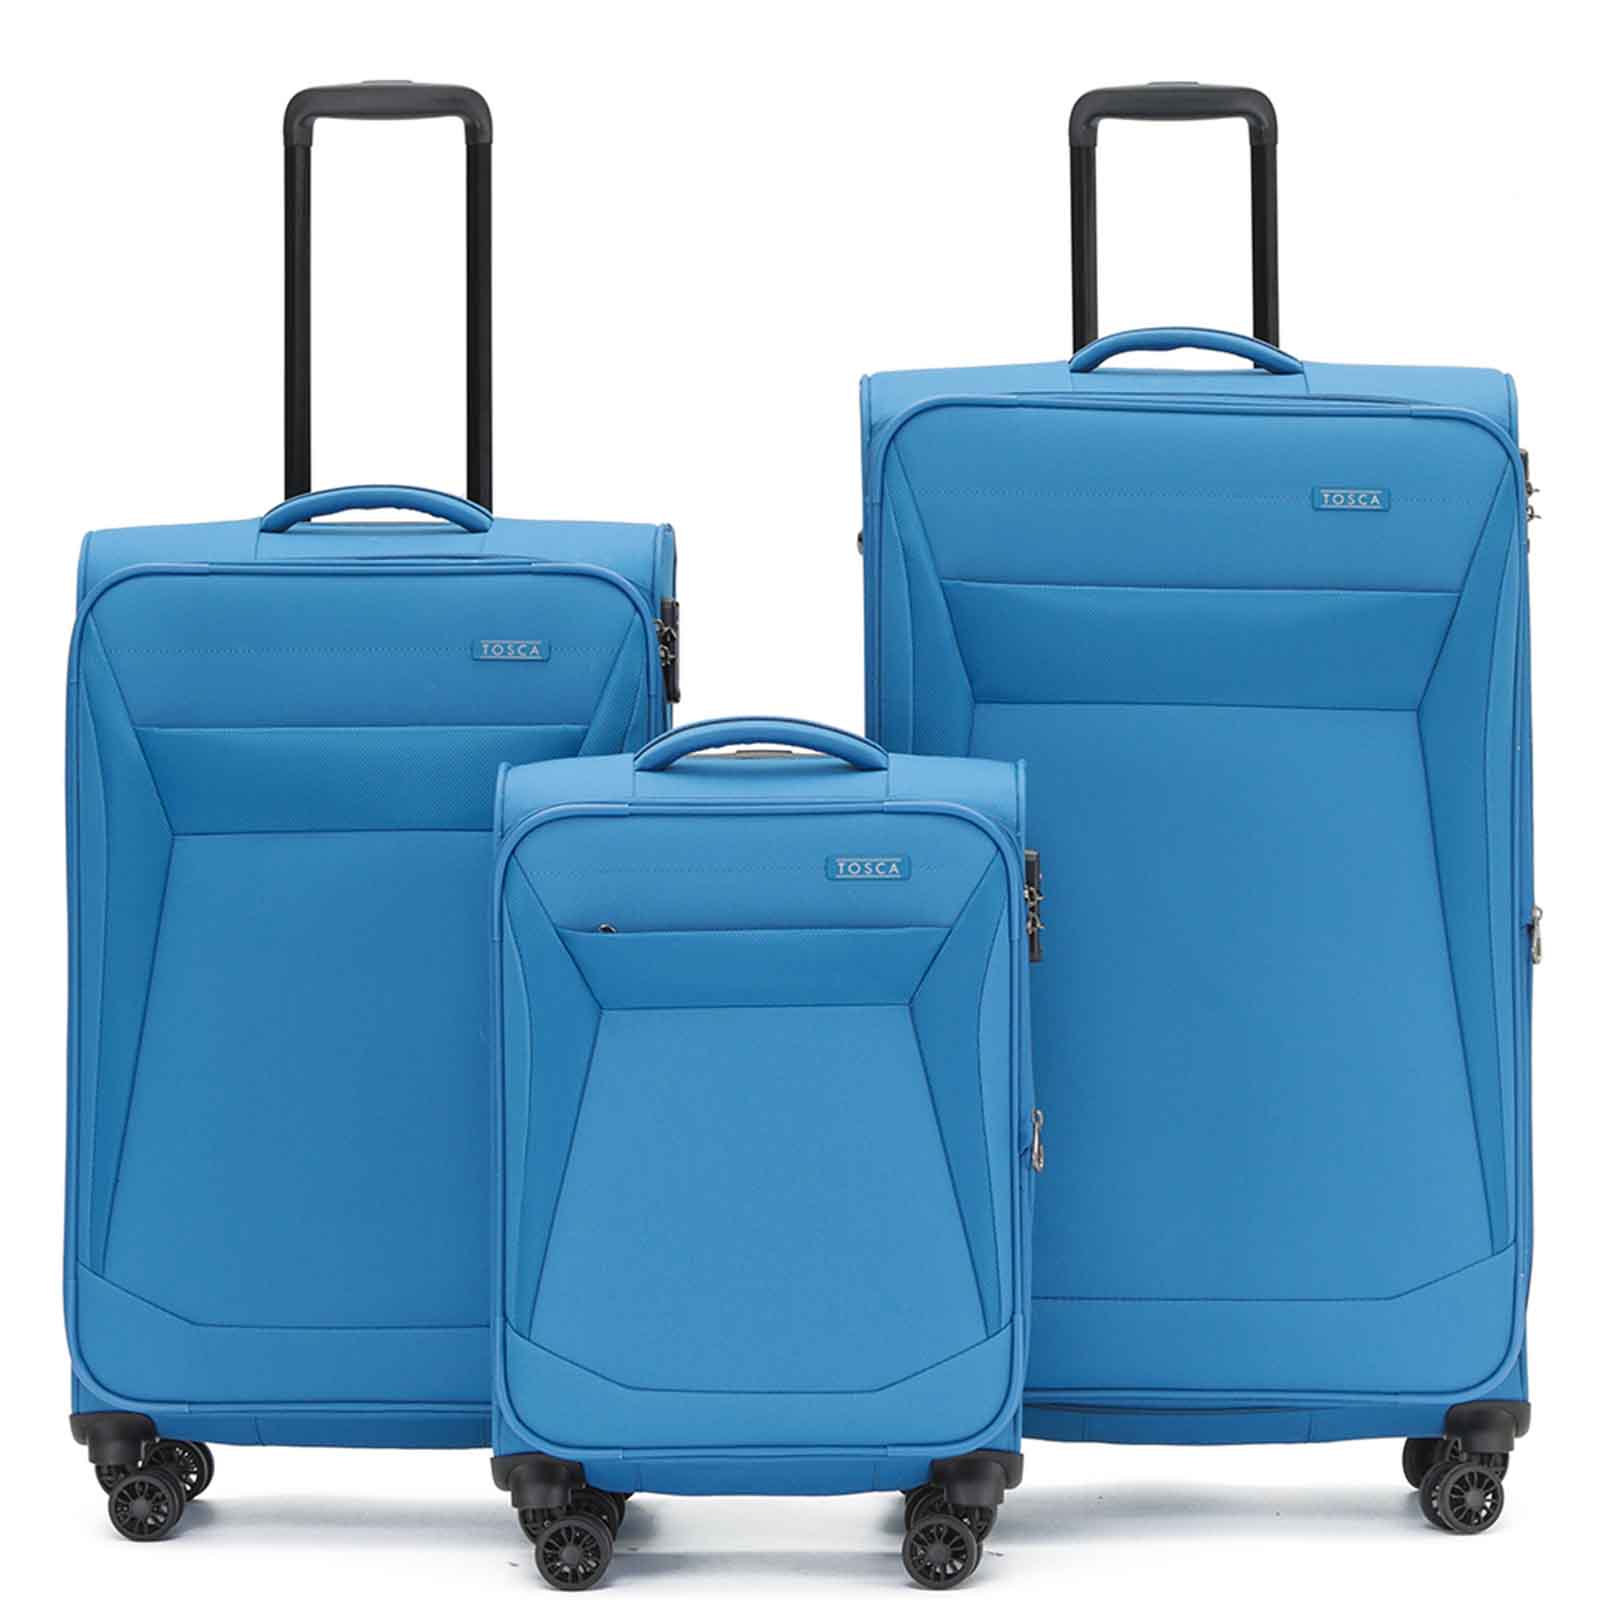 Tosca-Aviator-4-Wheel-Carry-On-Suitcase-Blue-Set